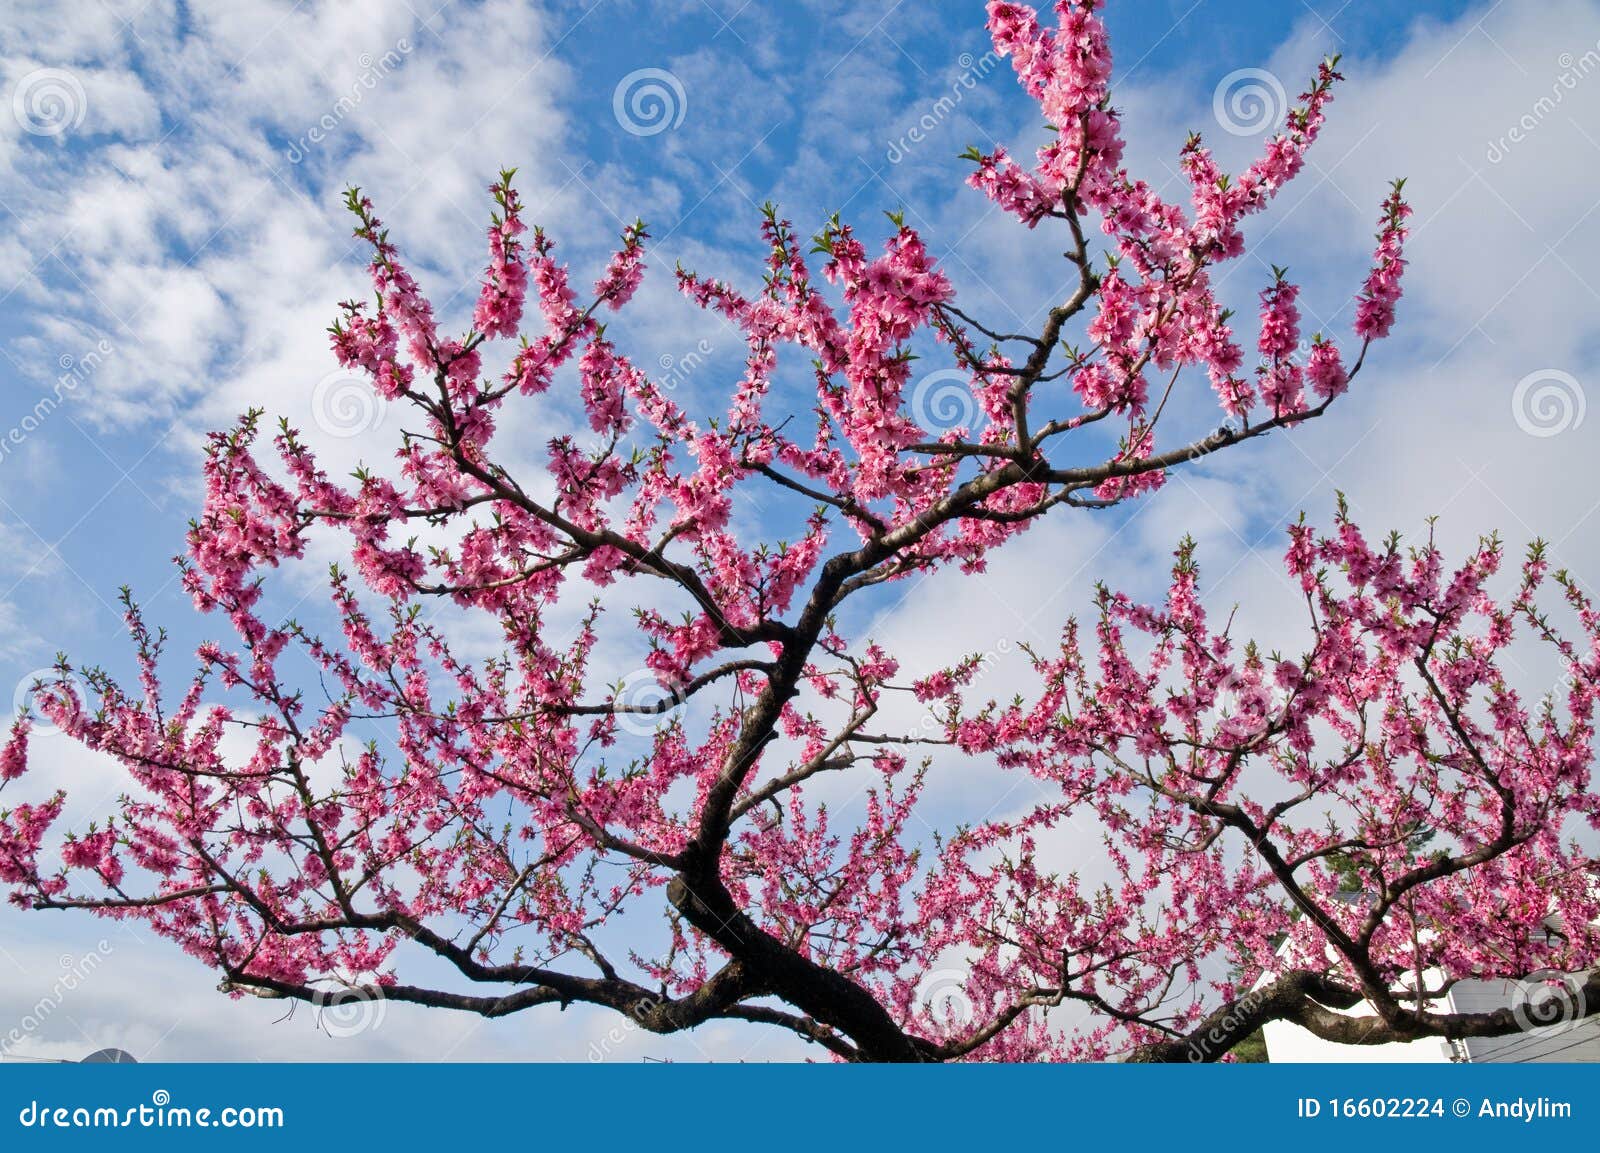 Pink Sakura Flowers In Nature Background. Royalty-Free Stock ...